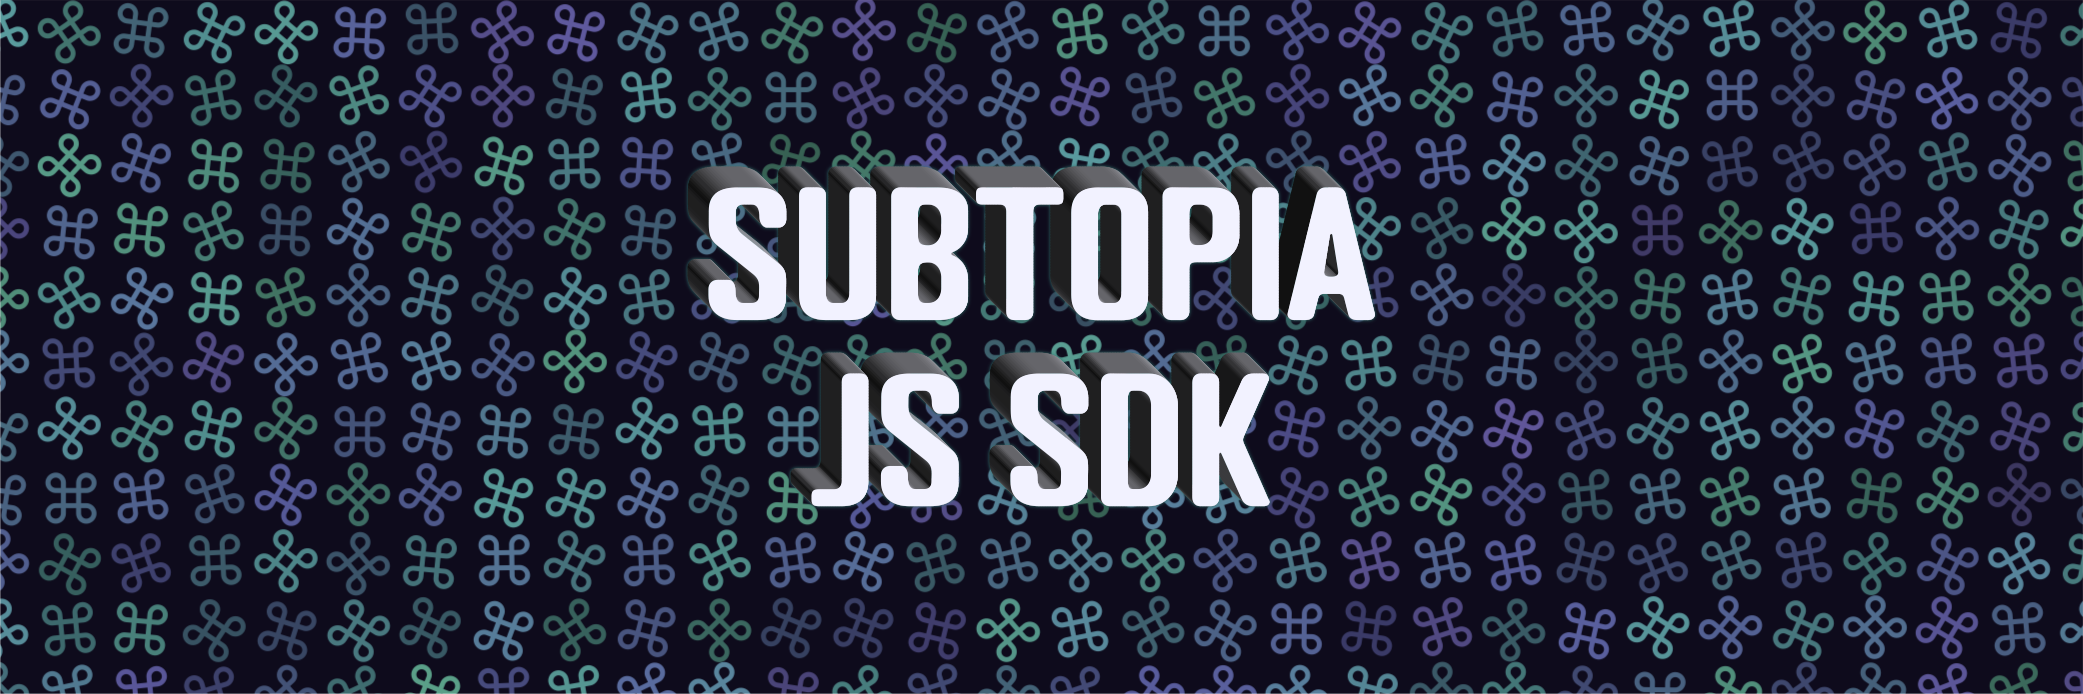 subtopia-js-sdk